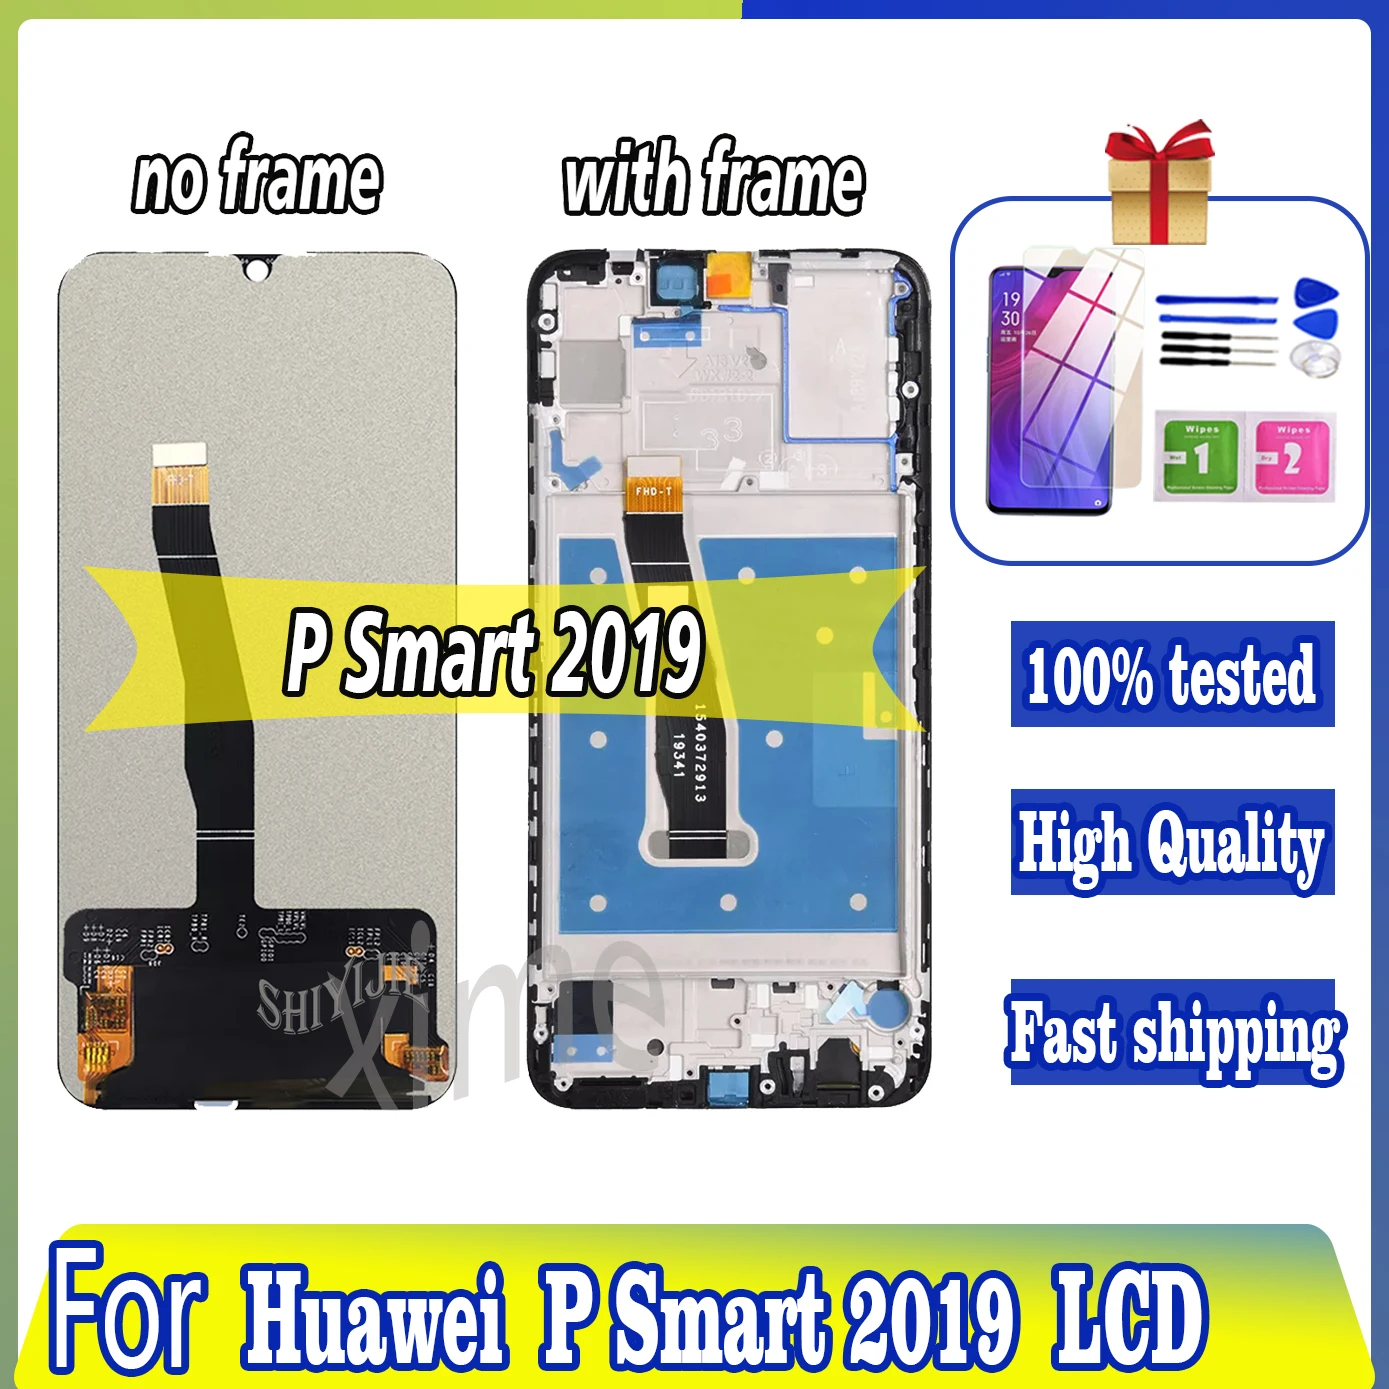 621-original-for-huawei-p-smart-2019-pot-lx1-lcd-display-touch-screen-for-huawei-p-smart2019-lcd-digitizer-replacement-assembl